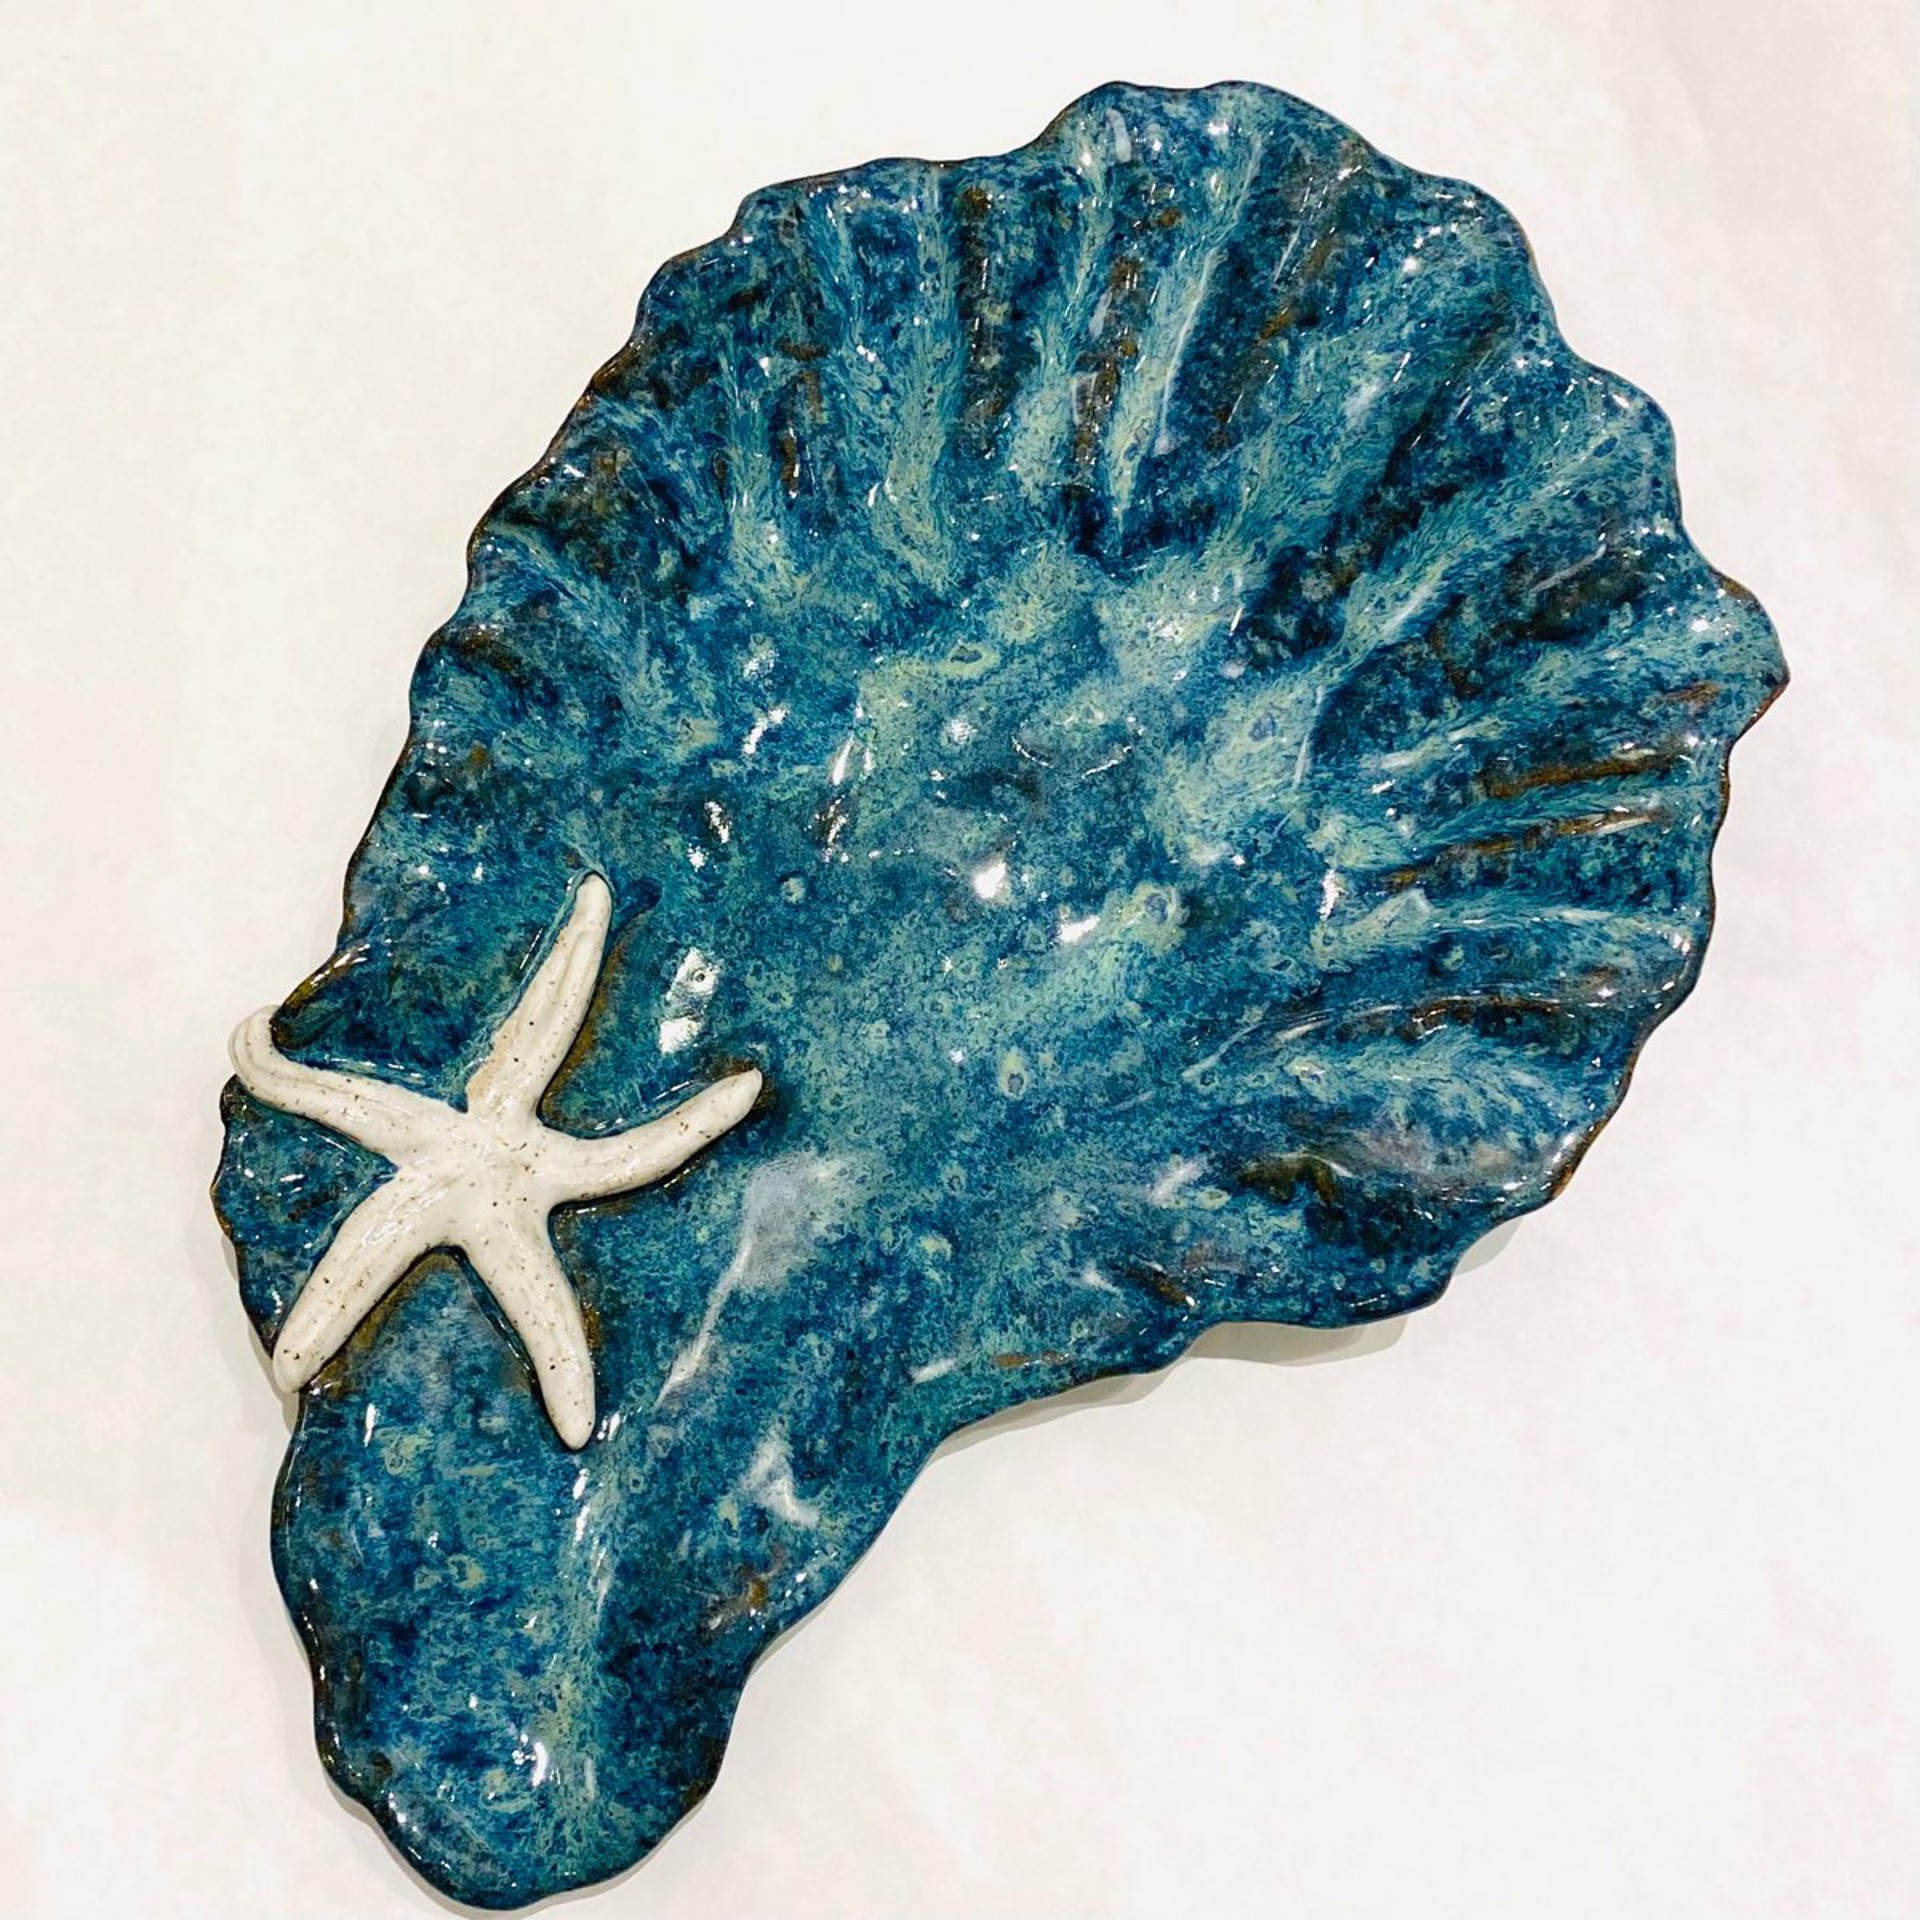 Logan22-882 Platter Oyster Shell Shape With One Starfish (Blue Glaze) by Jim & Steffi Logan